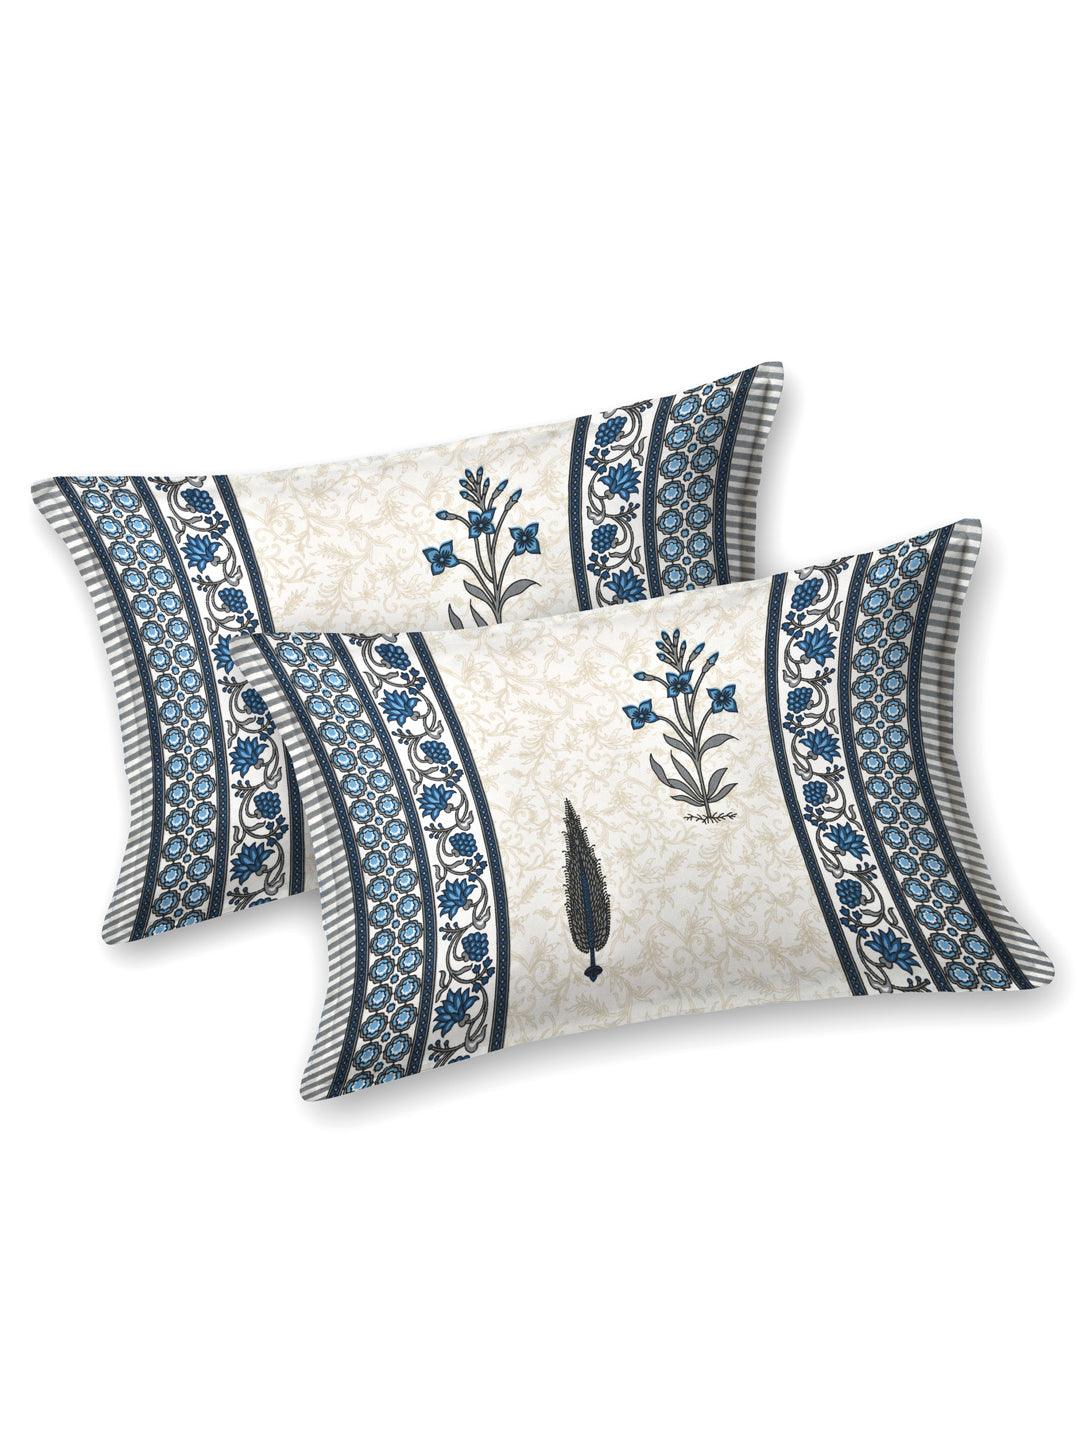 Floral Printed Bedding Set - 1 King Bedsheet, 1 Comforter, 4 Pillow Covers